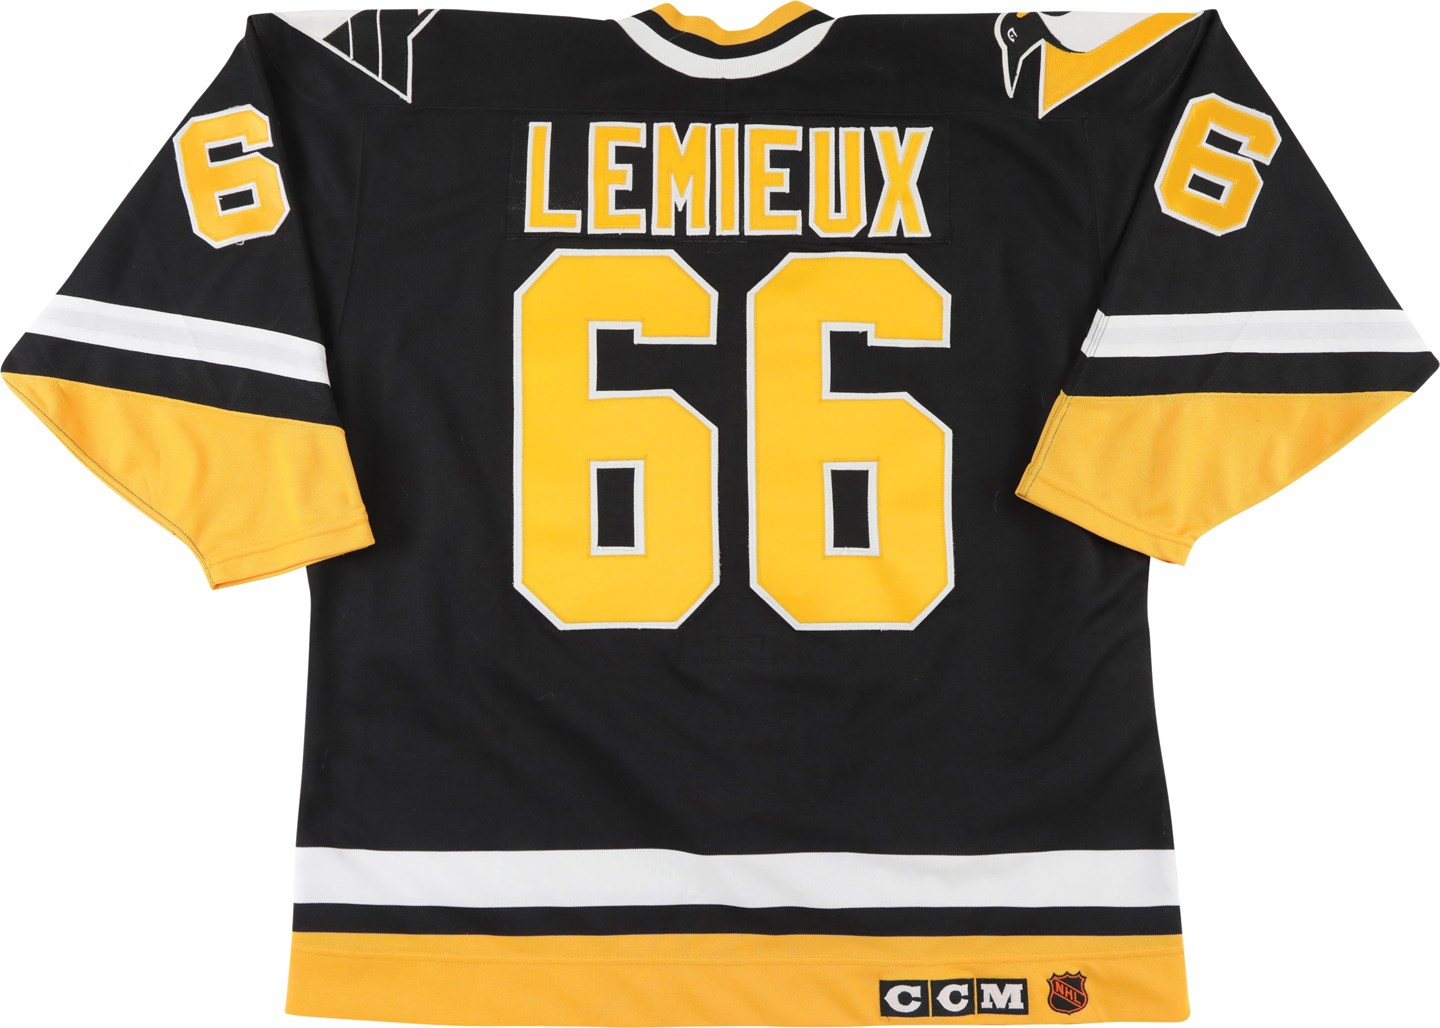 1993-94 Mario Lemieux Pittsburgh Penguins Game Worn Jersey